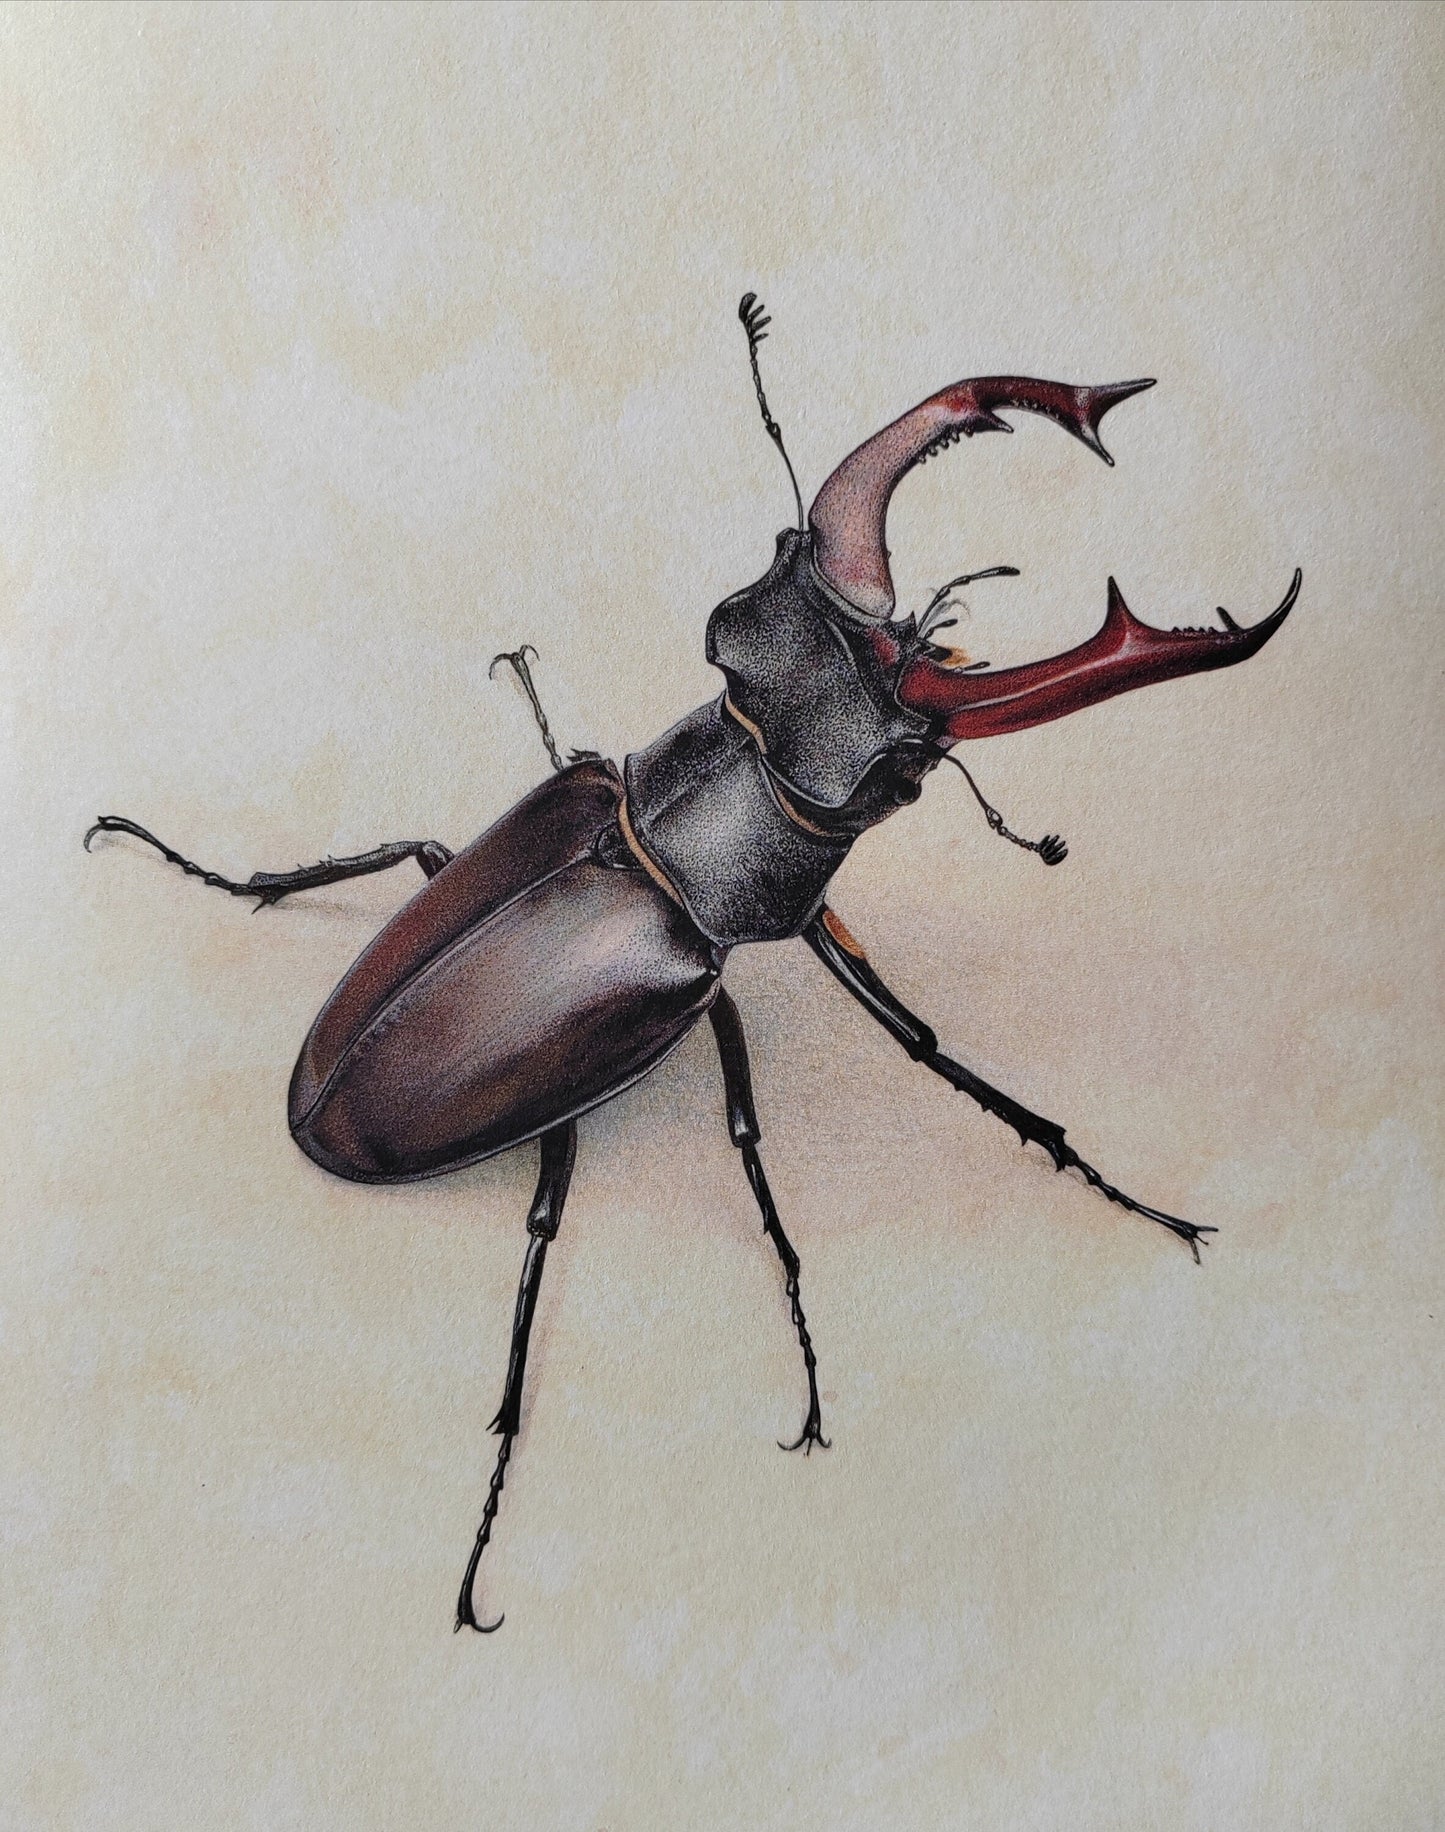 Stag Beetle, Lucanus cervus limited edition art print 10x8"